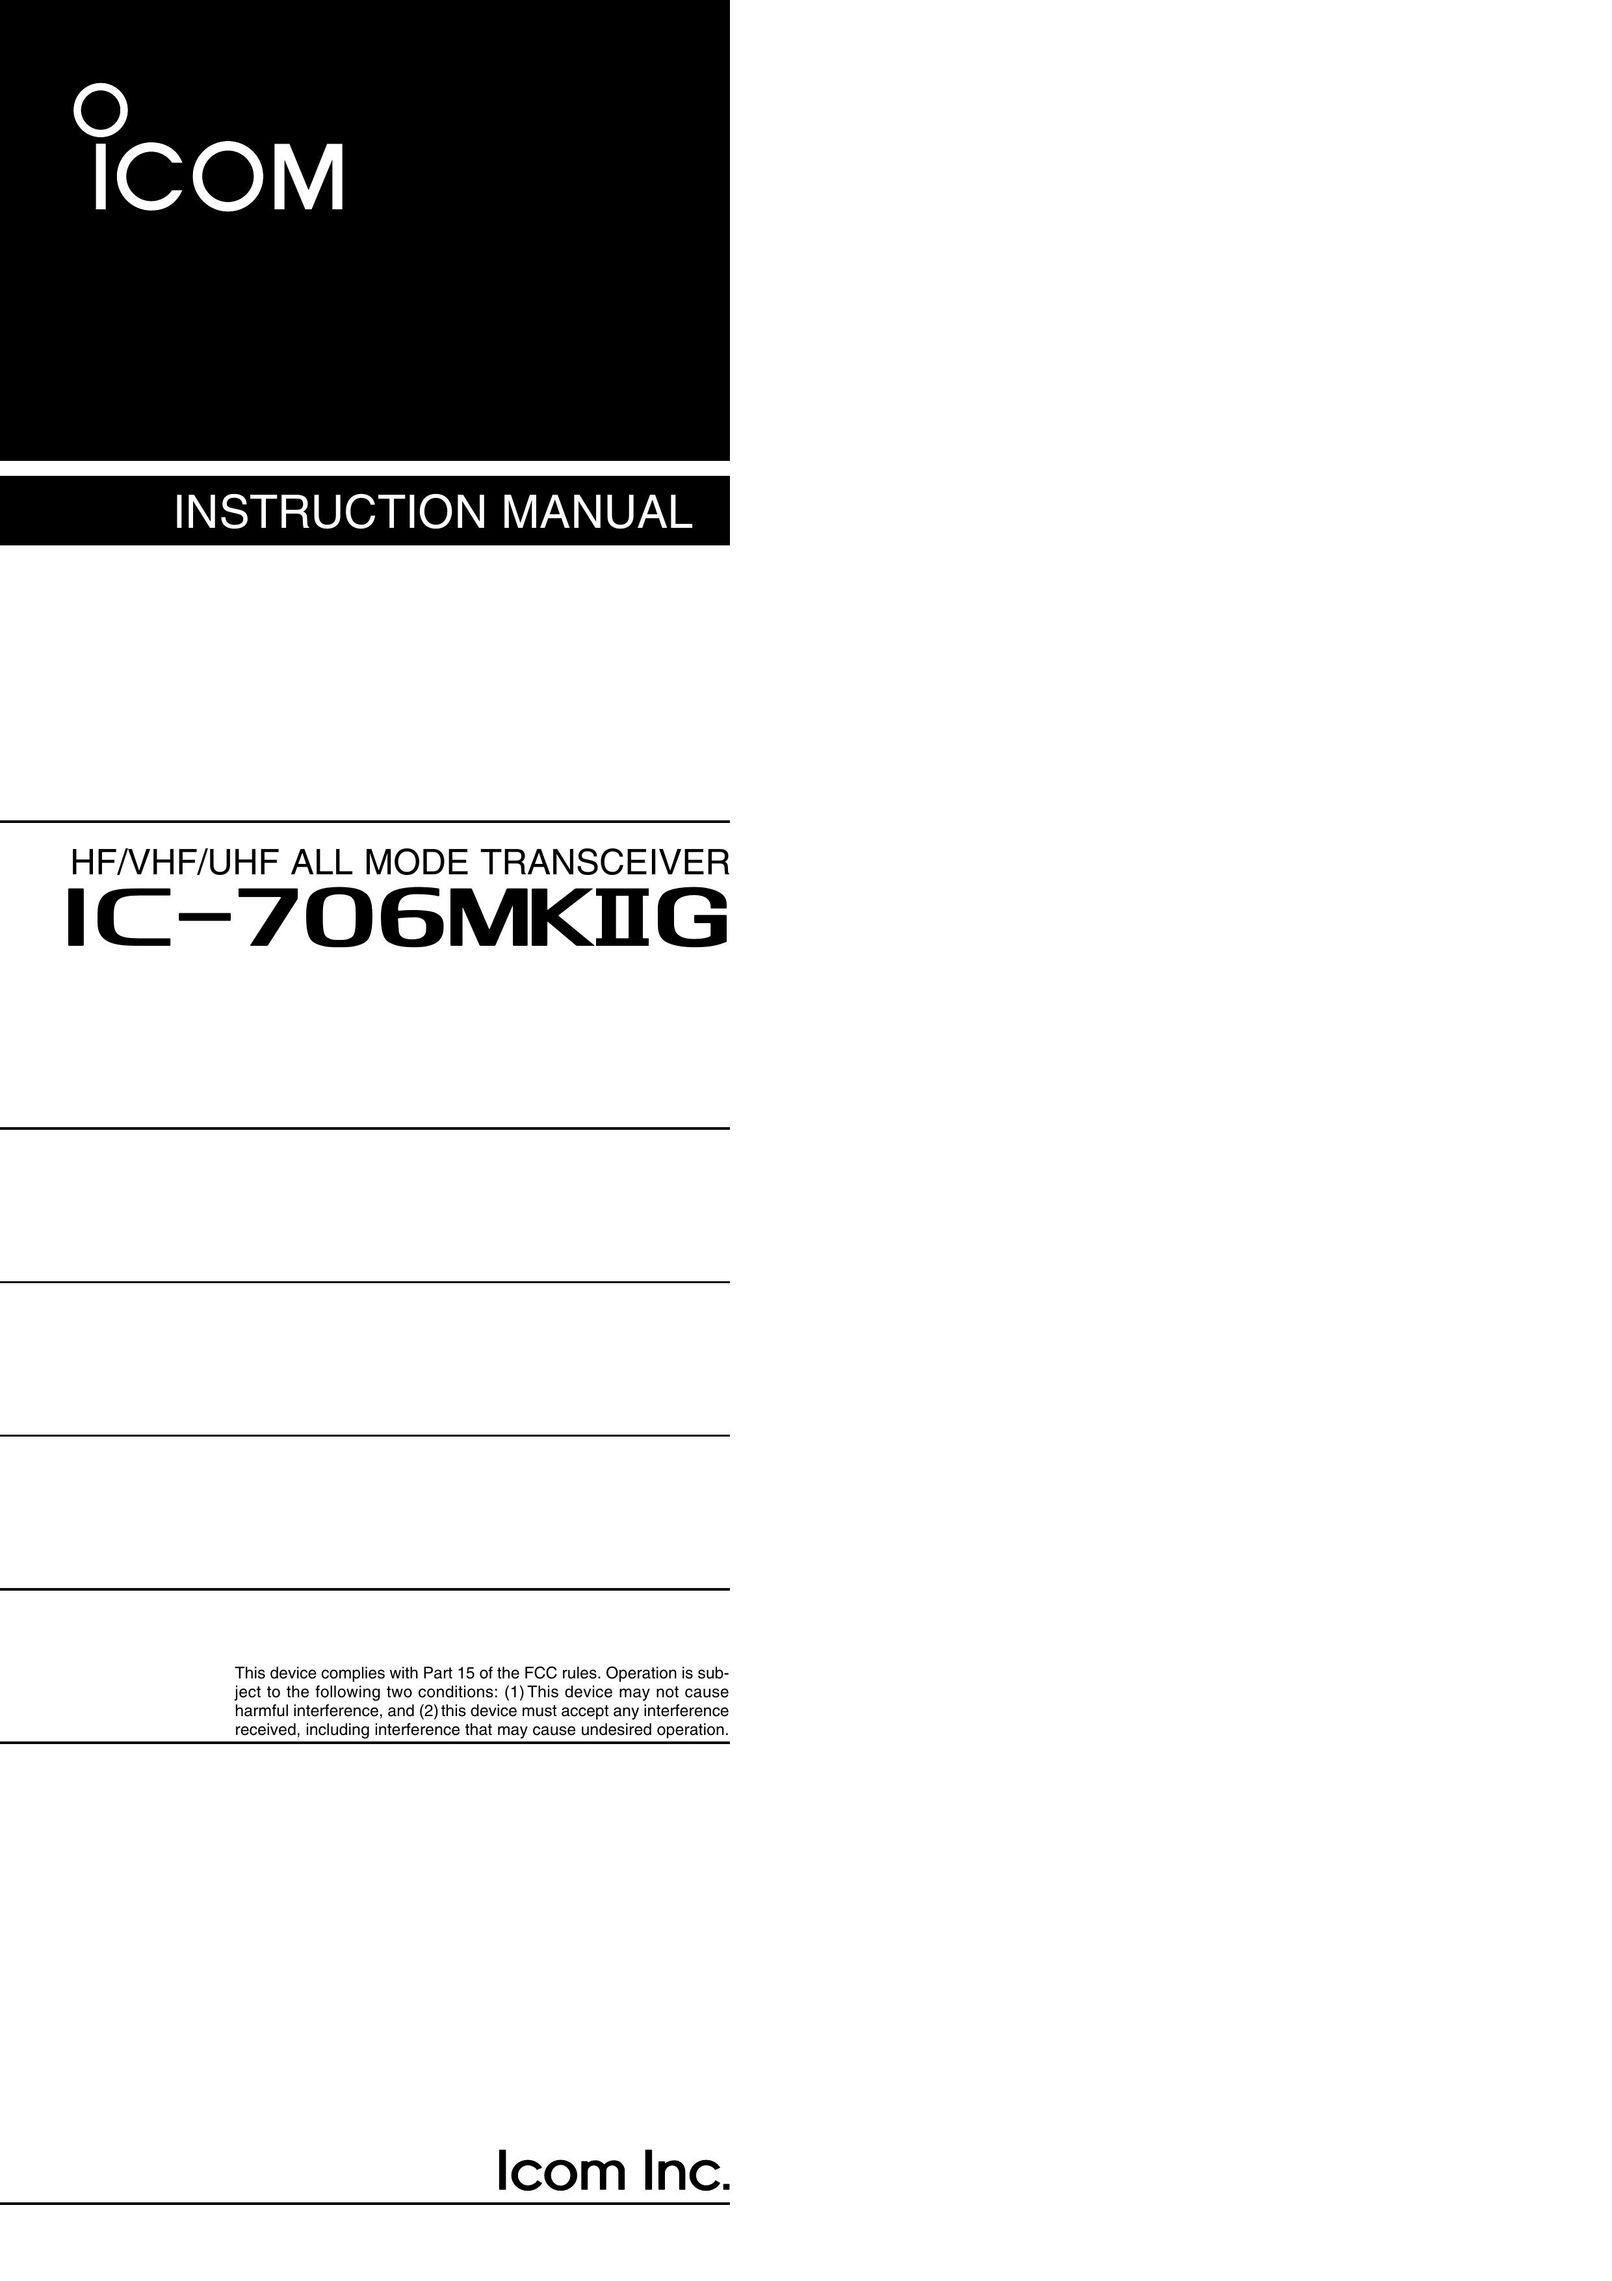 Icom IC-706MKIIG Home Security System User Manual